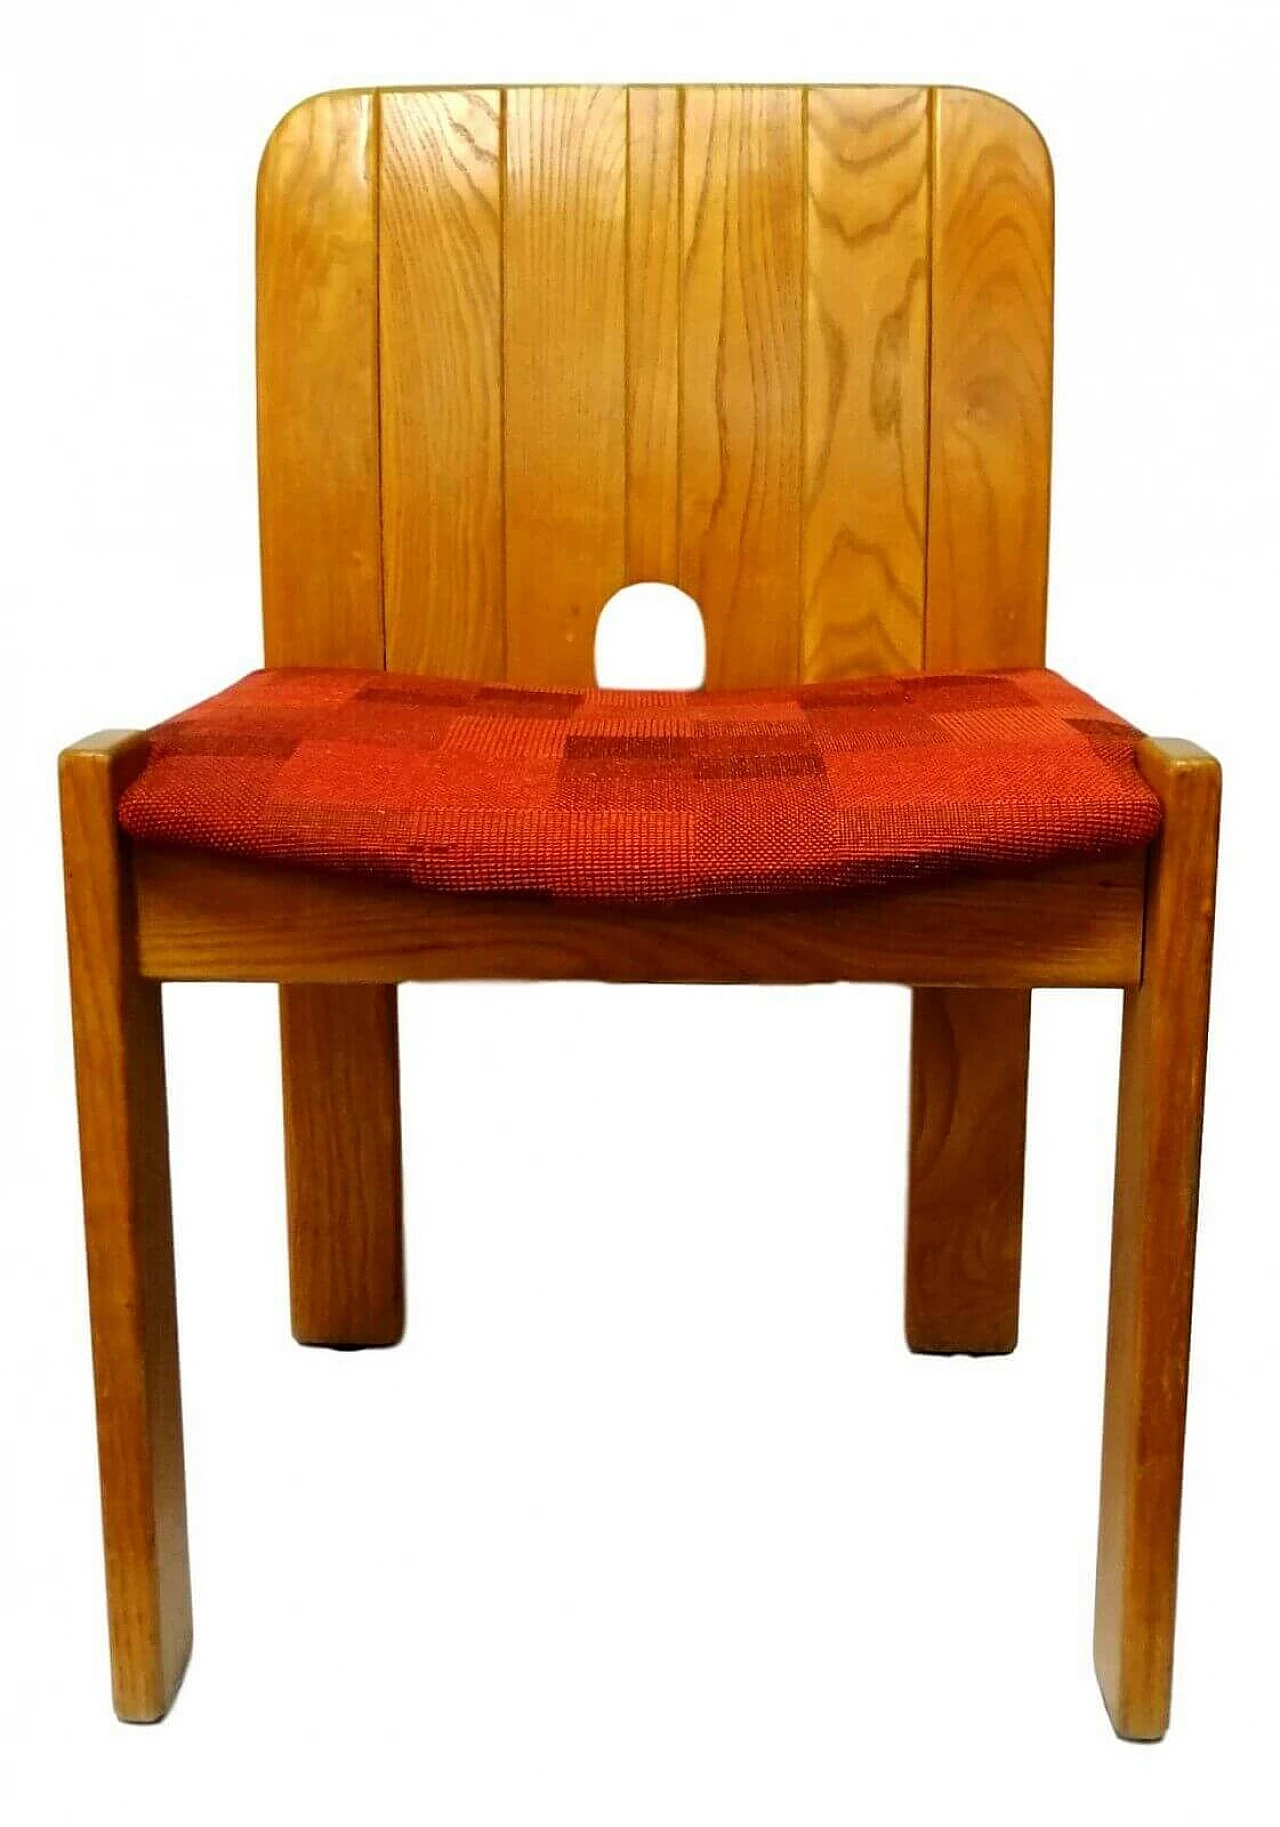 4 Sedie in legno di design, anni '70 1164511